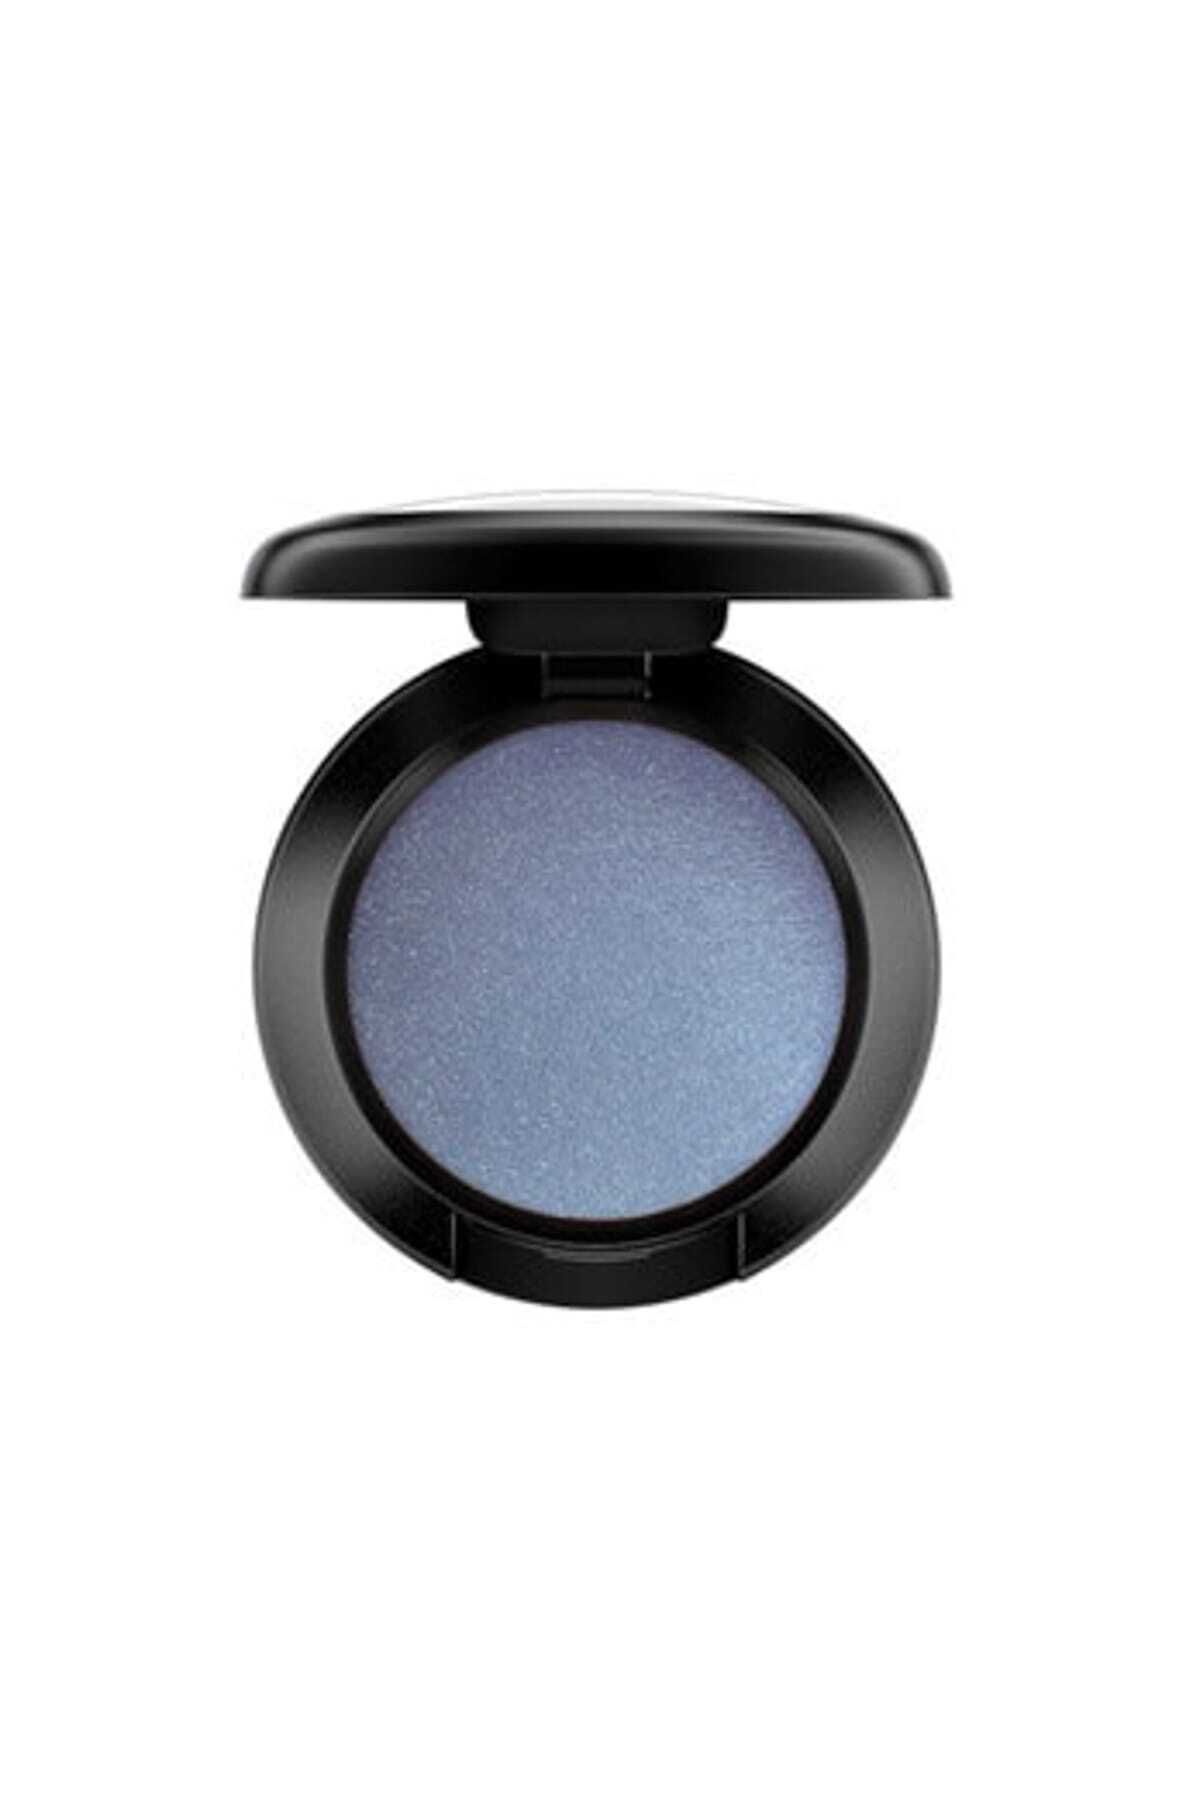 Mac Yüksek Pigmentli (TİLT) Göz Farı - Eye Shadow 1.5 g